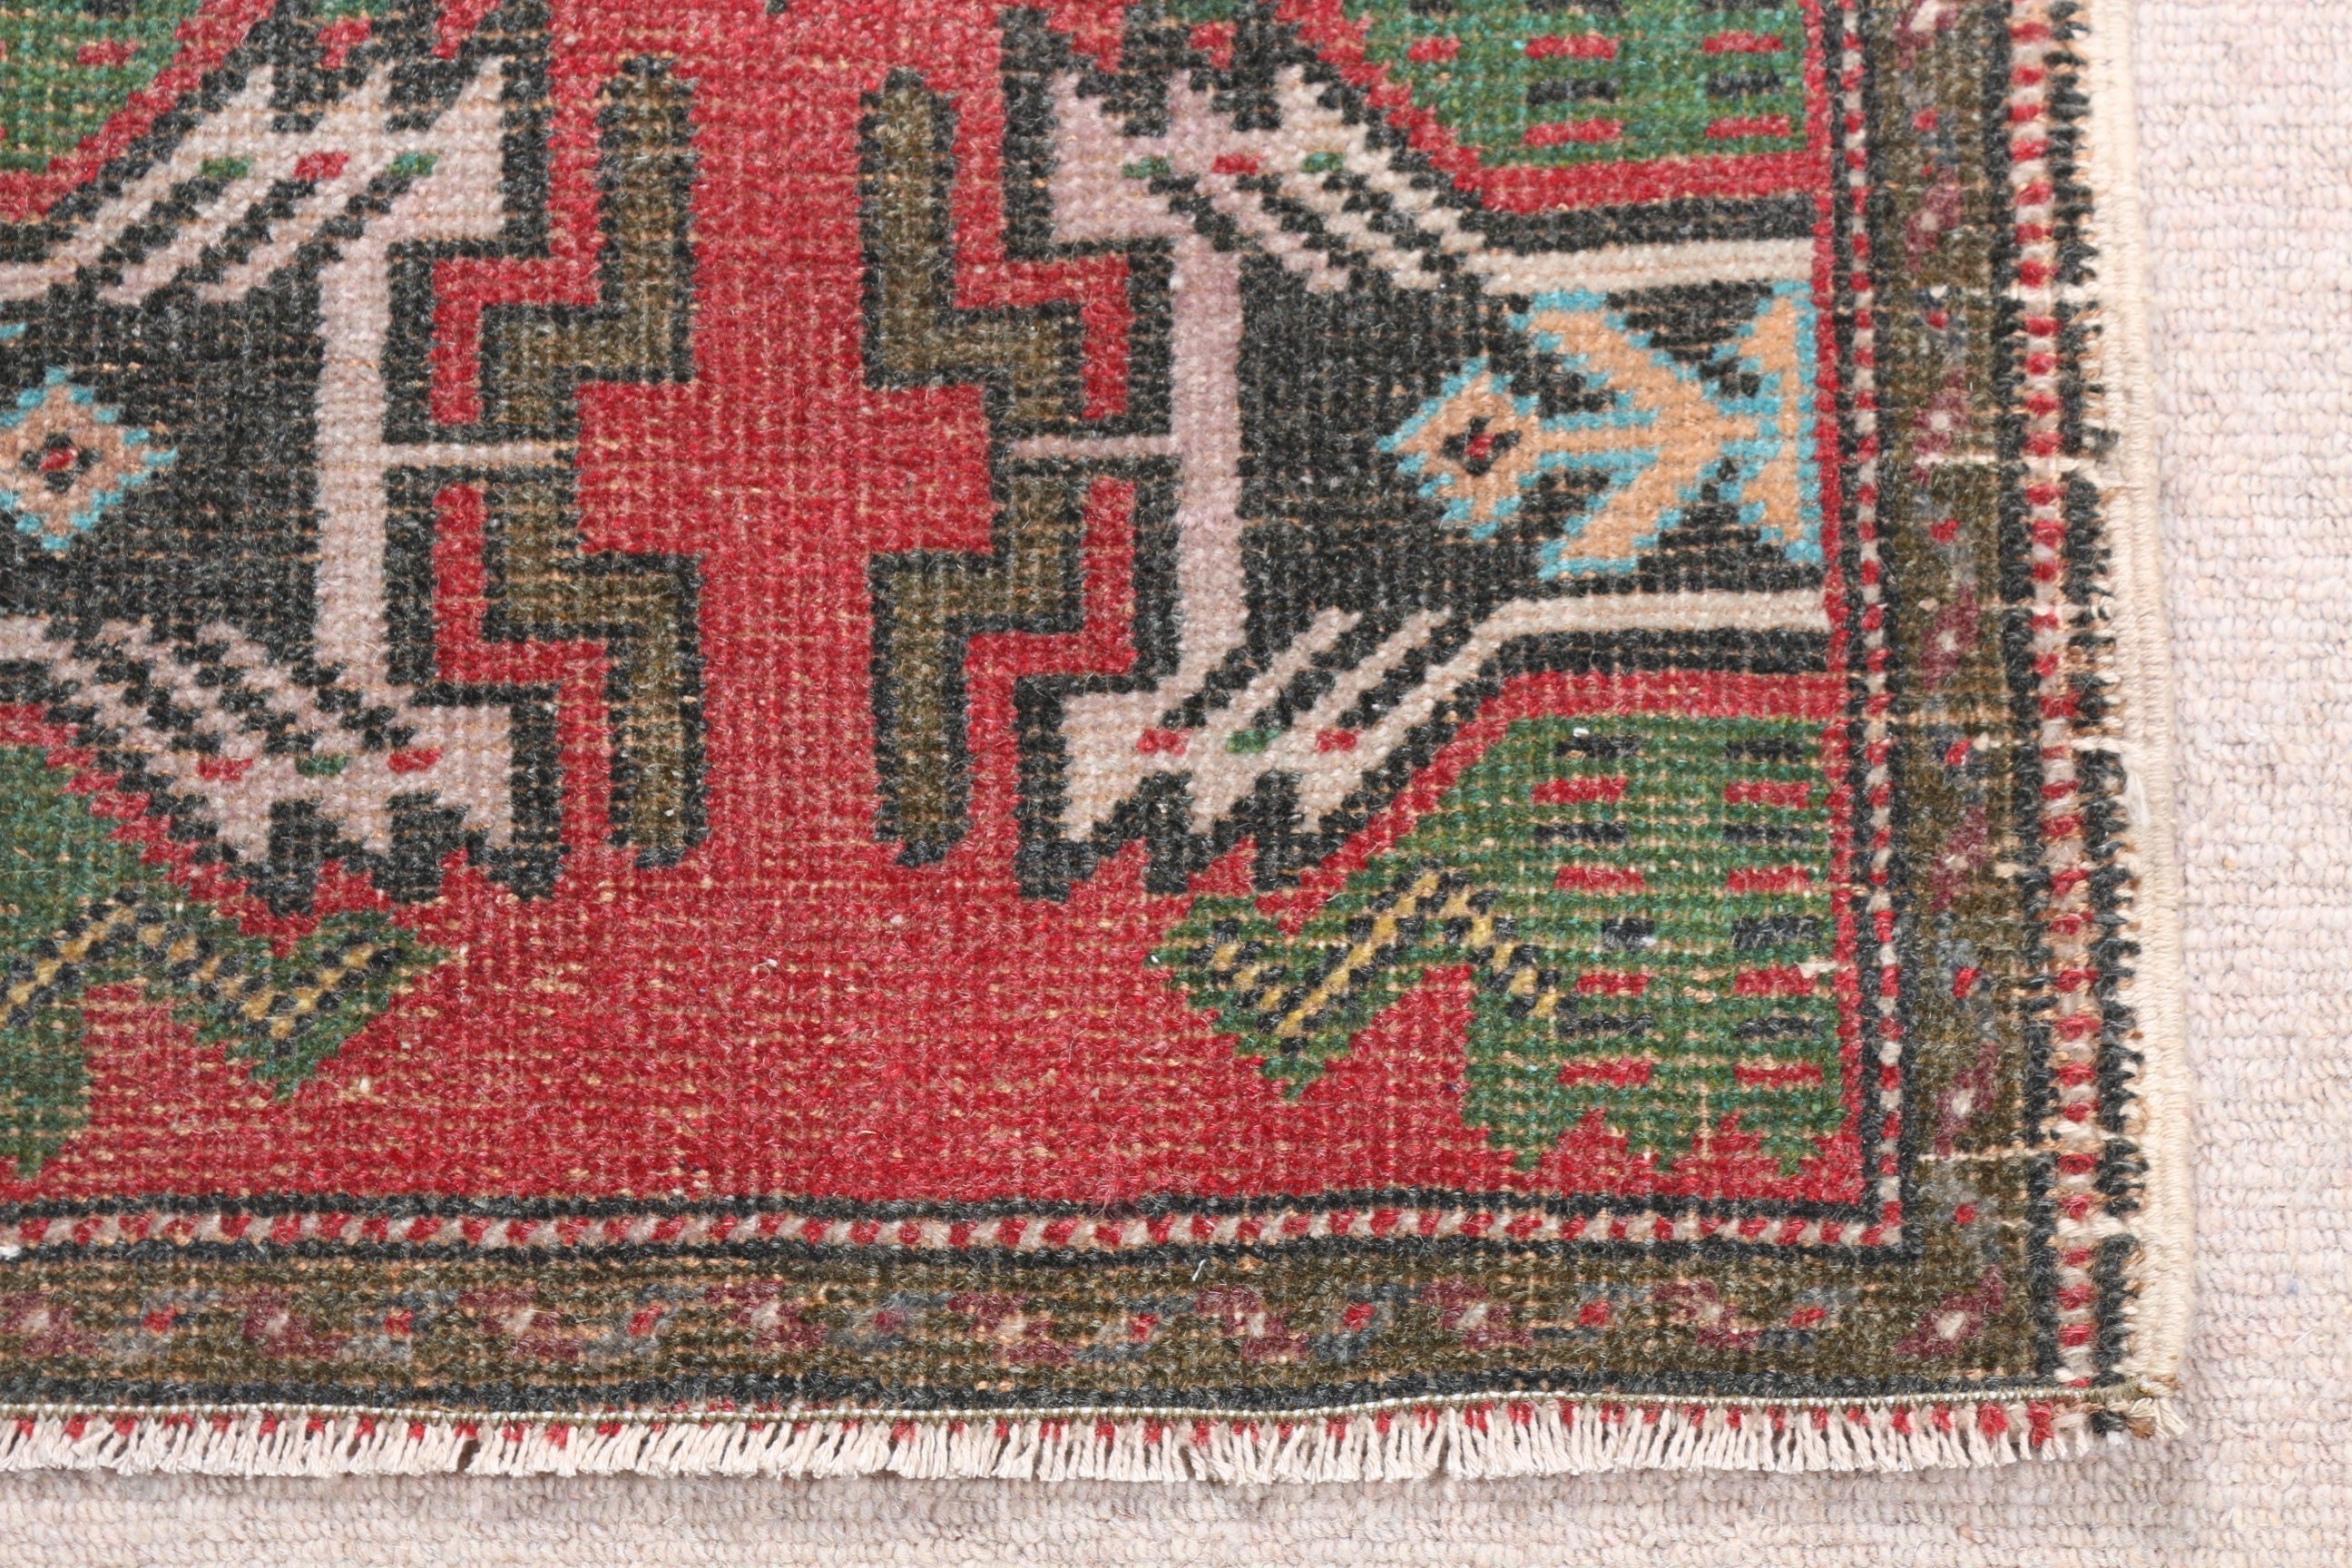 Rugs for Car Mat, Vintage Rug, Moroccan Rug, 1.8x3.1 ft Small Rug, Wool Rugs, Turkish Rug, Door Mat Rugs, Entry Rug, Red Anatolian Rug